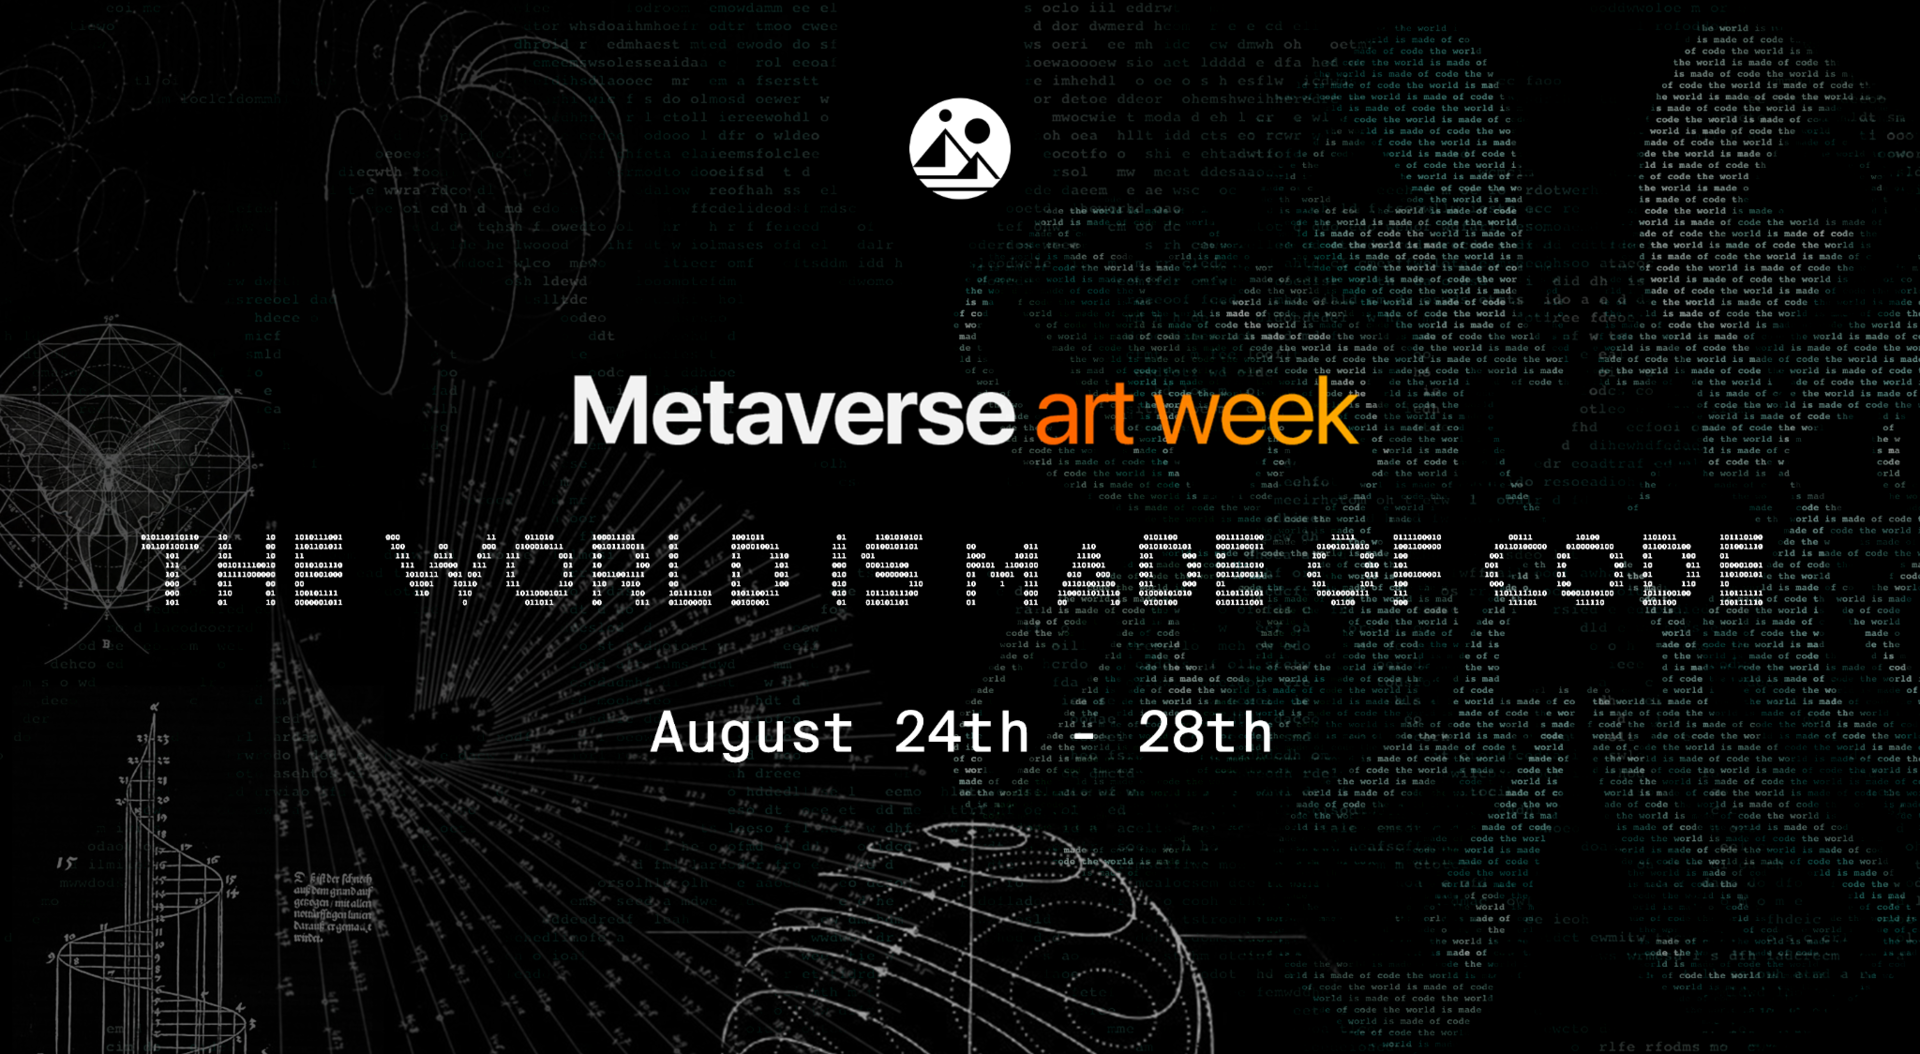 Metaverse Art Week 2022: The World is Made of Code